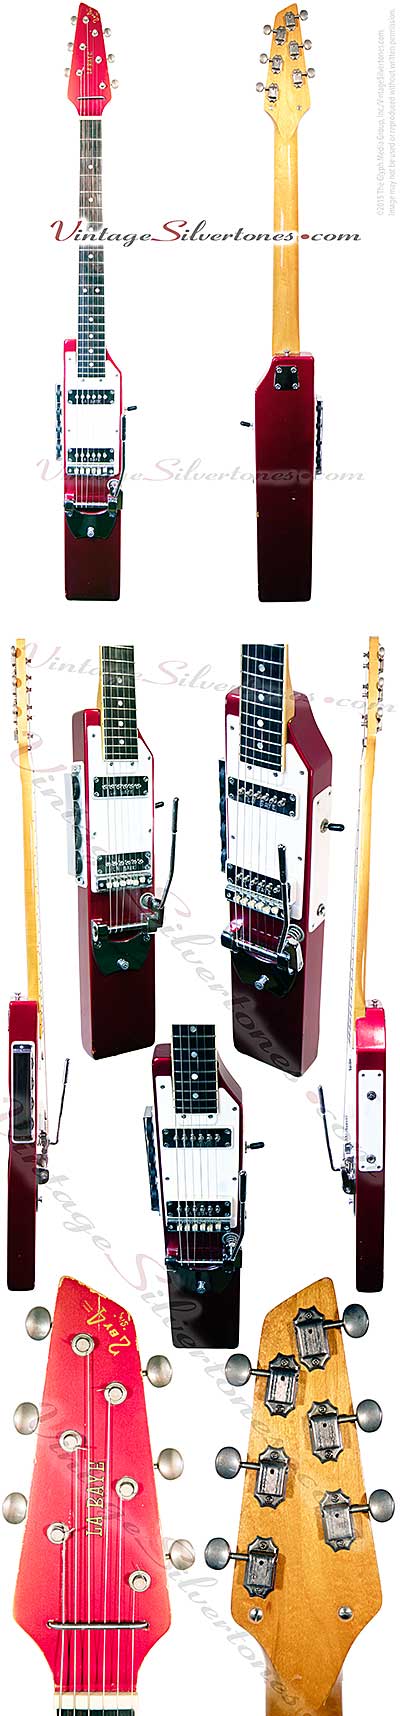 La Baye 2x4 Six guitar- 2 pickup, red solid body electric guitar, tremolo, made in Neodesha, Kansas USA circa 1967